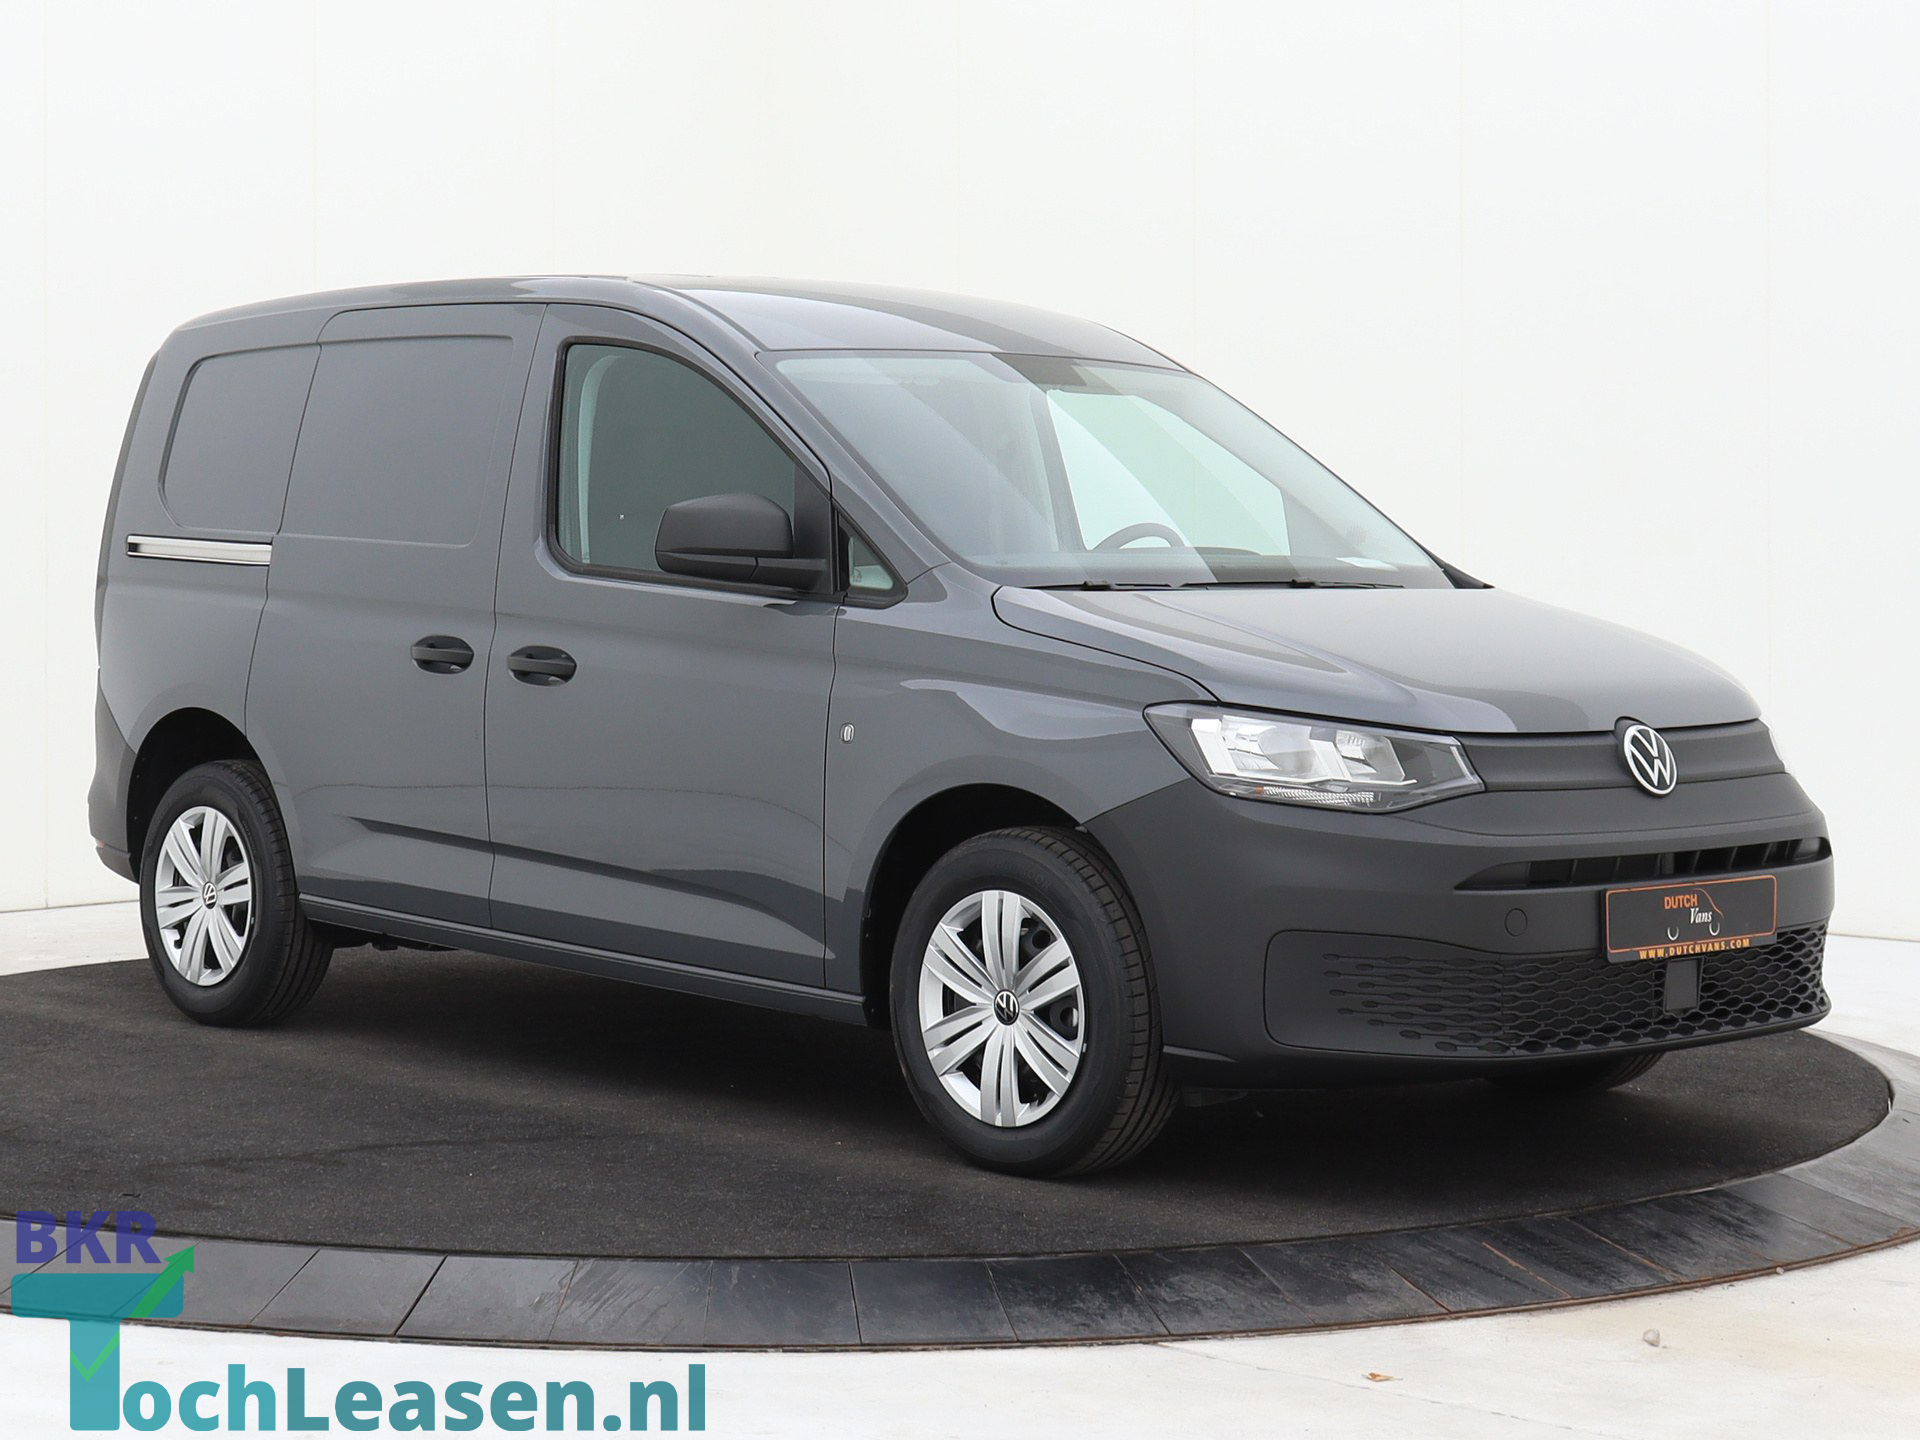 BKR toch leasen - Volkswagen Caddy - Grijs 19